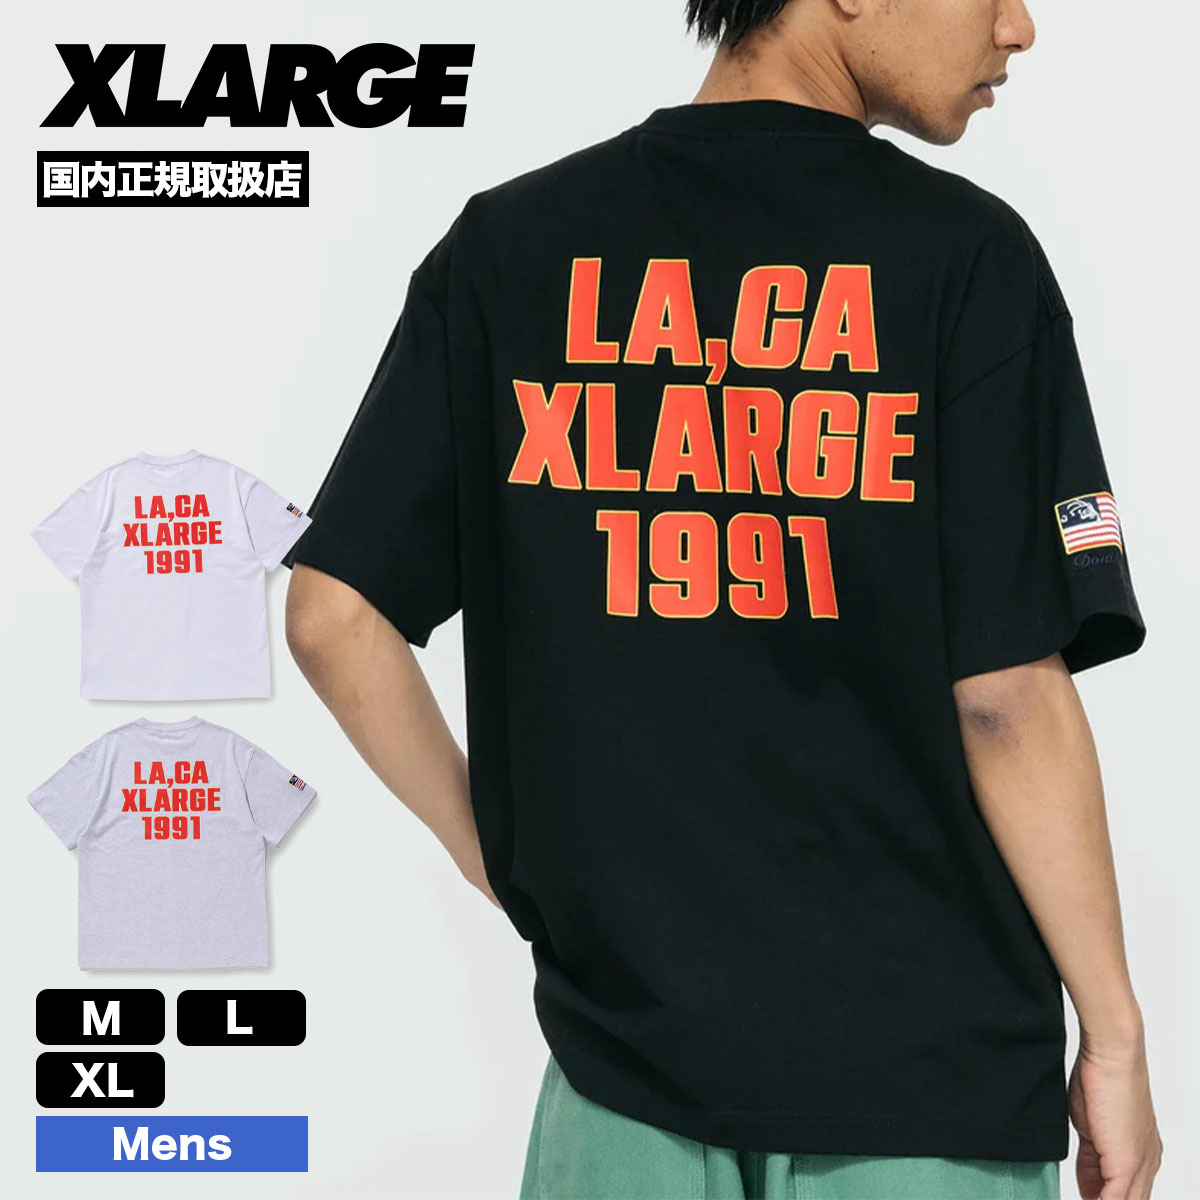 L【送料込・新品】エクストララージ XLARGE Tシャツ